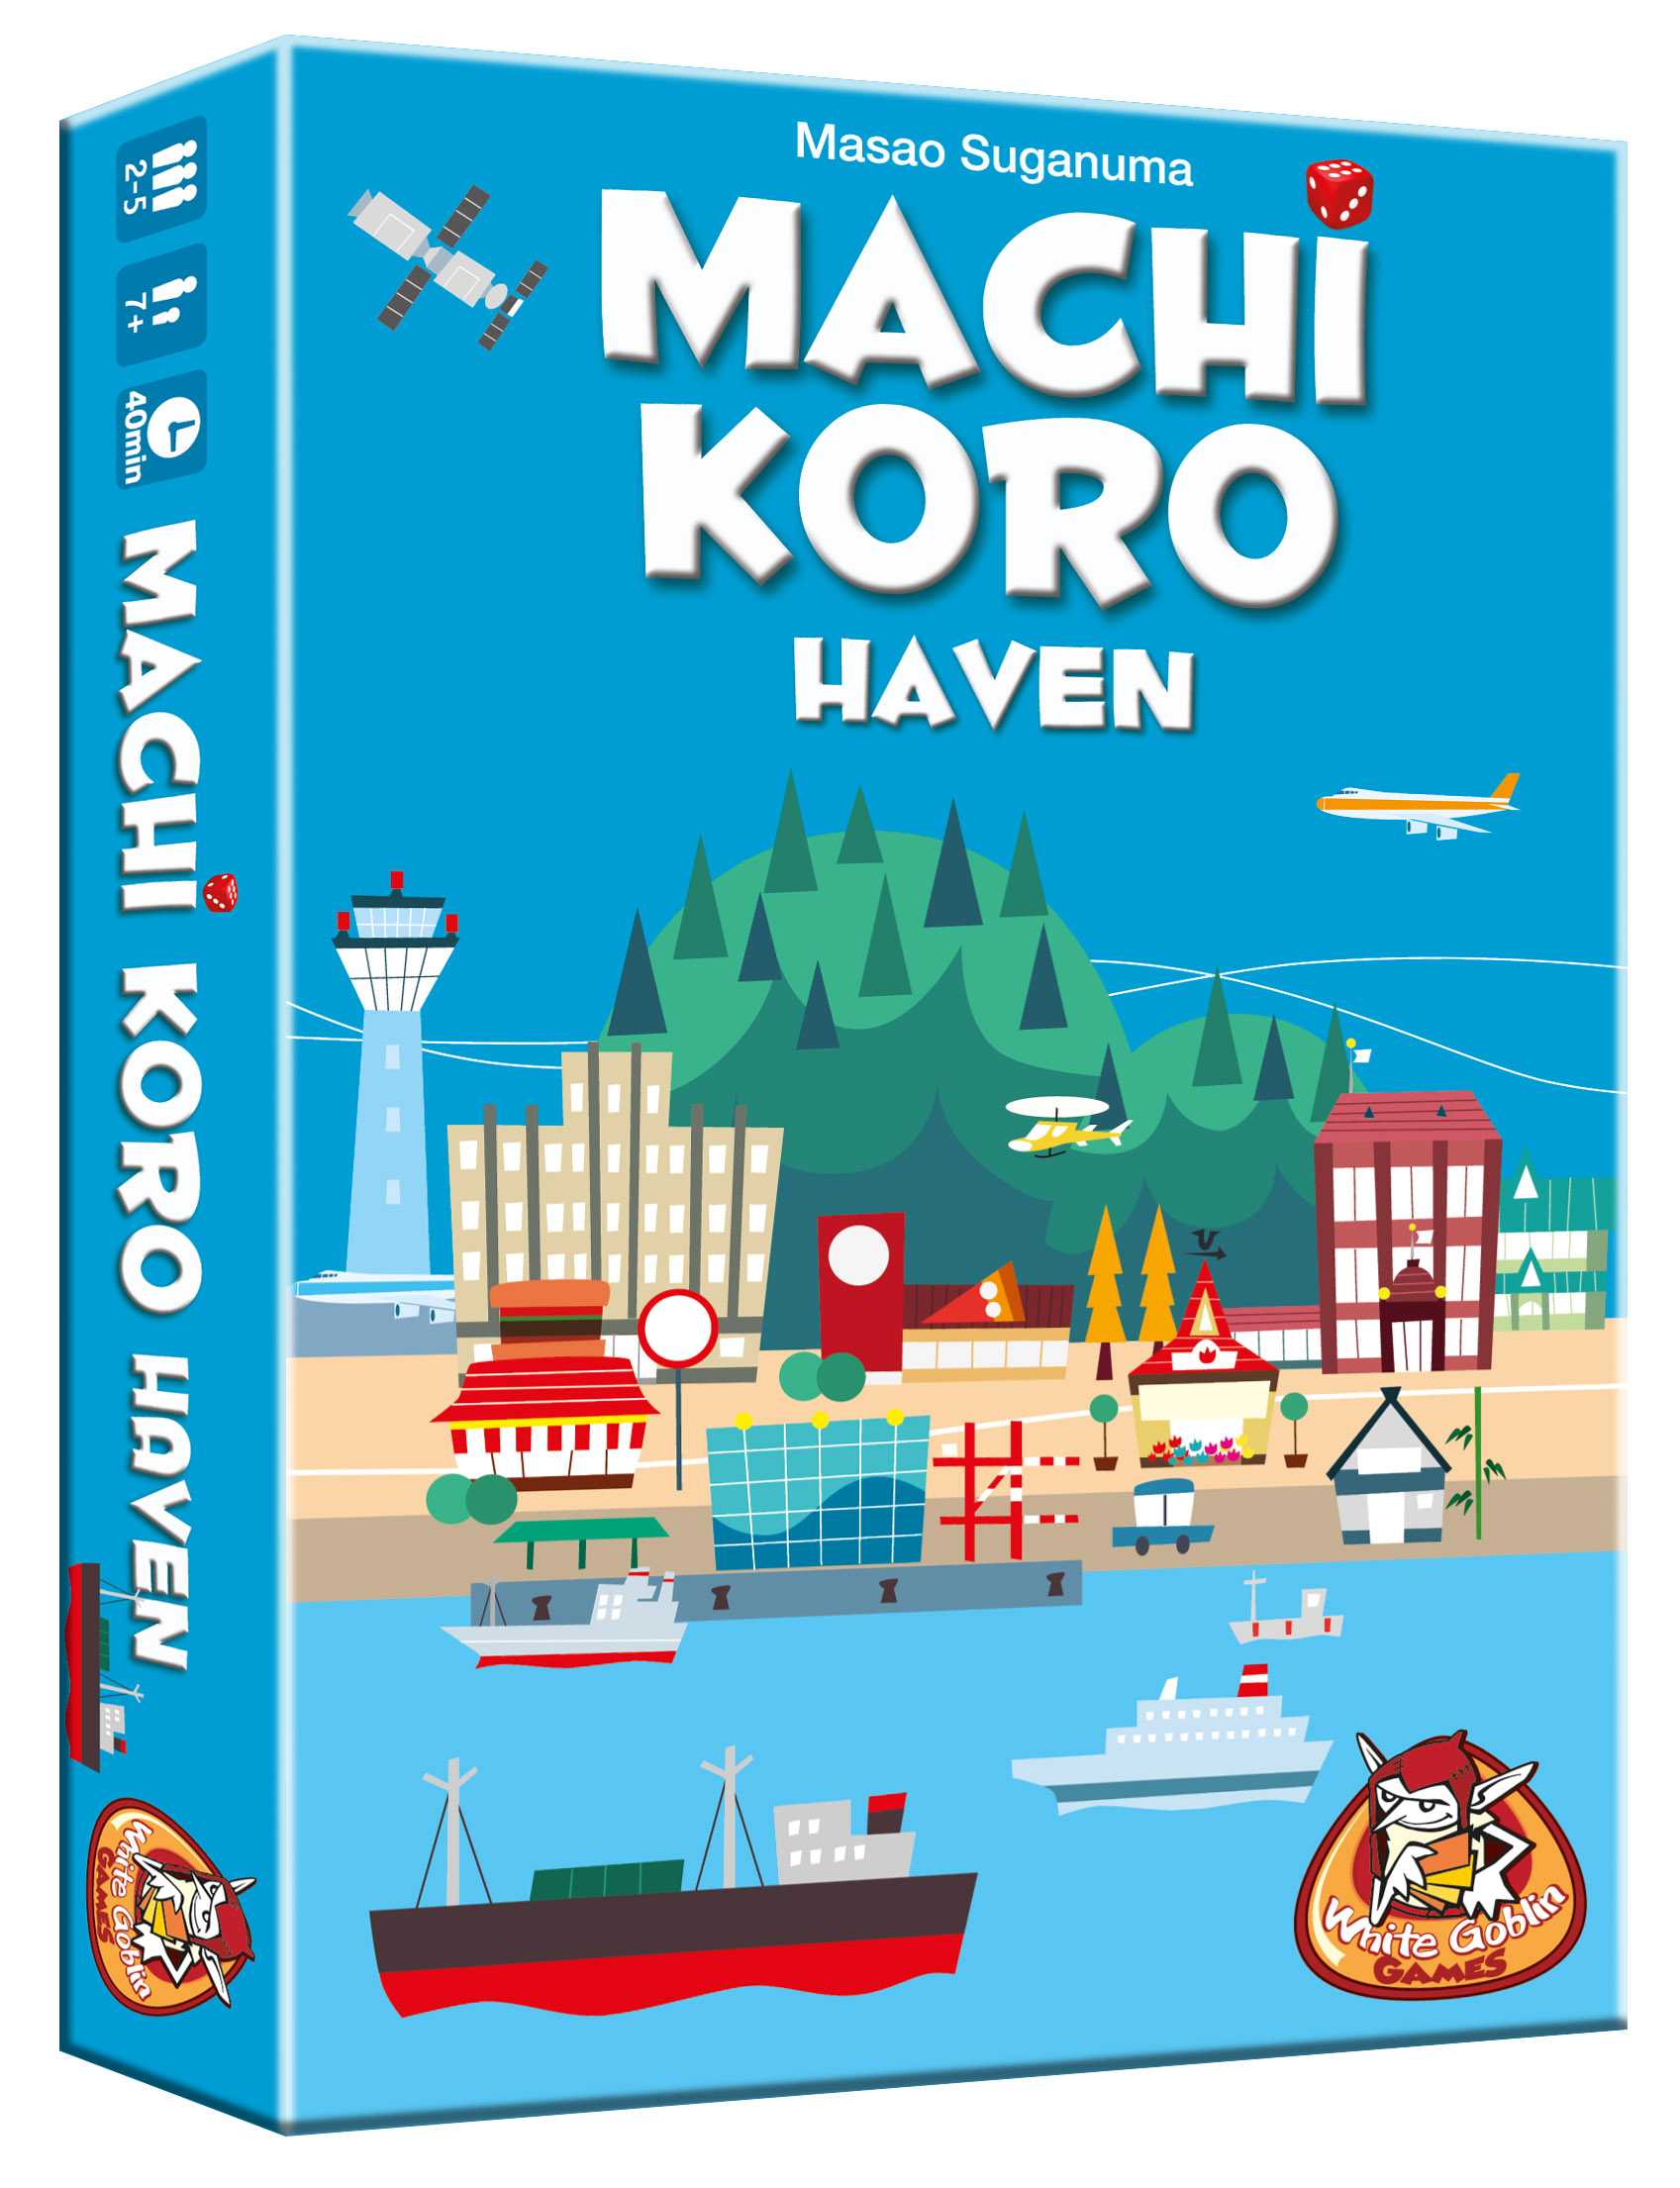 Machi Koro - Haven